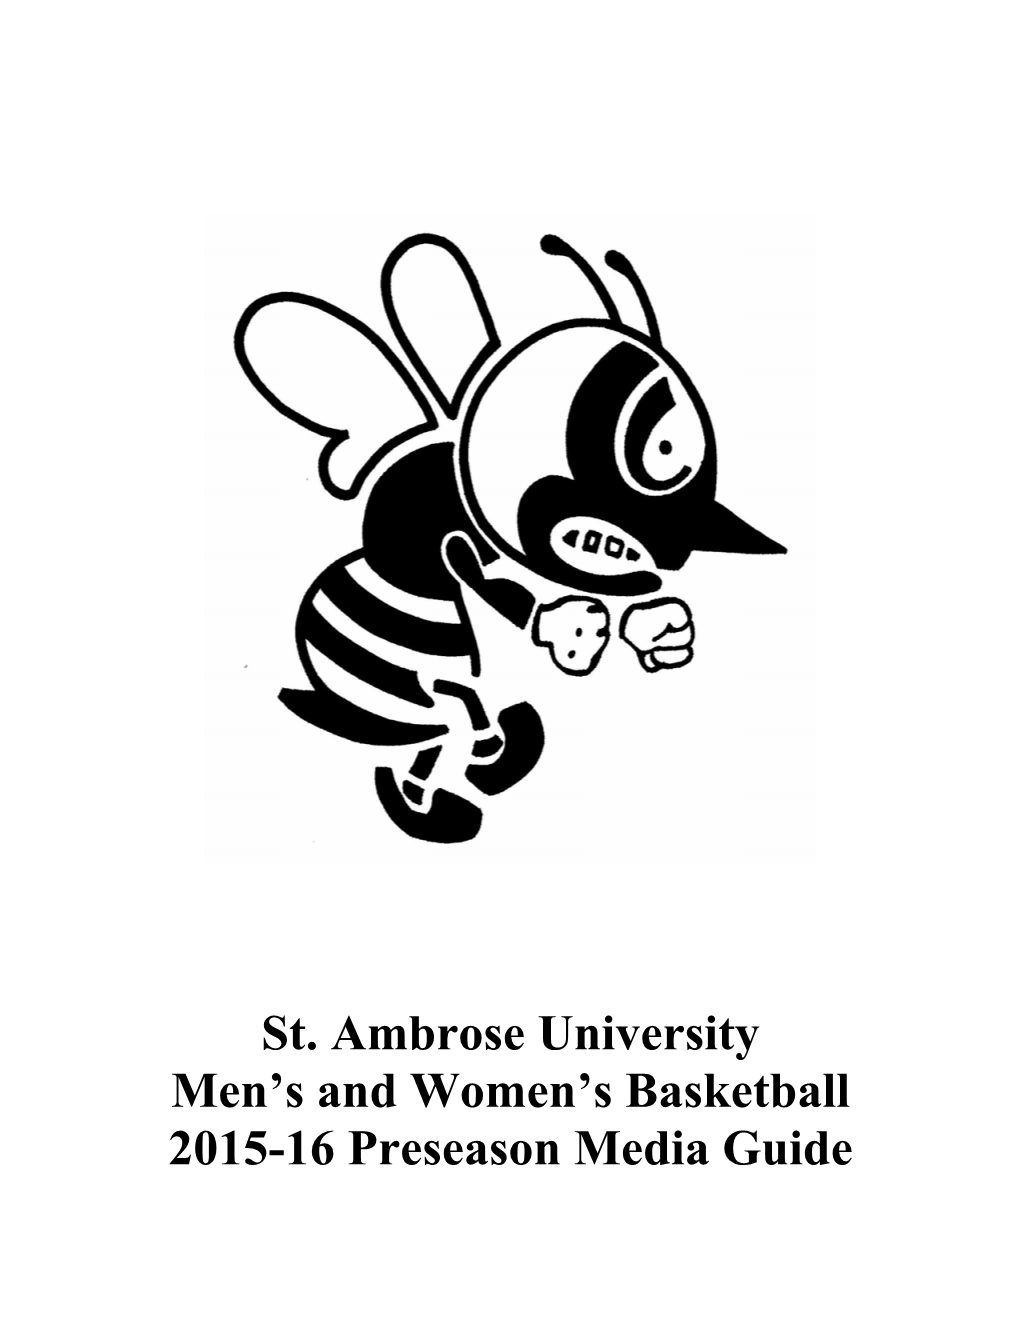 St. Ambrose University Men's and Women's Basketball 2015-16